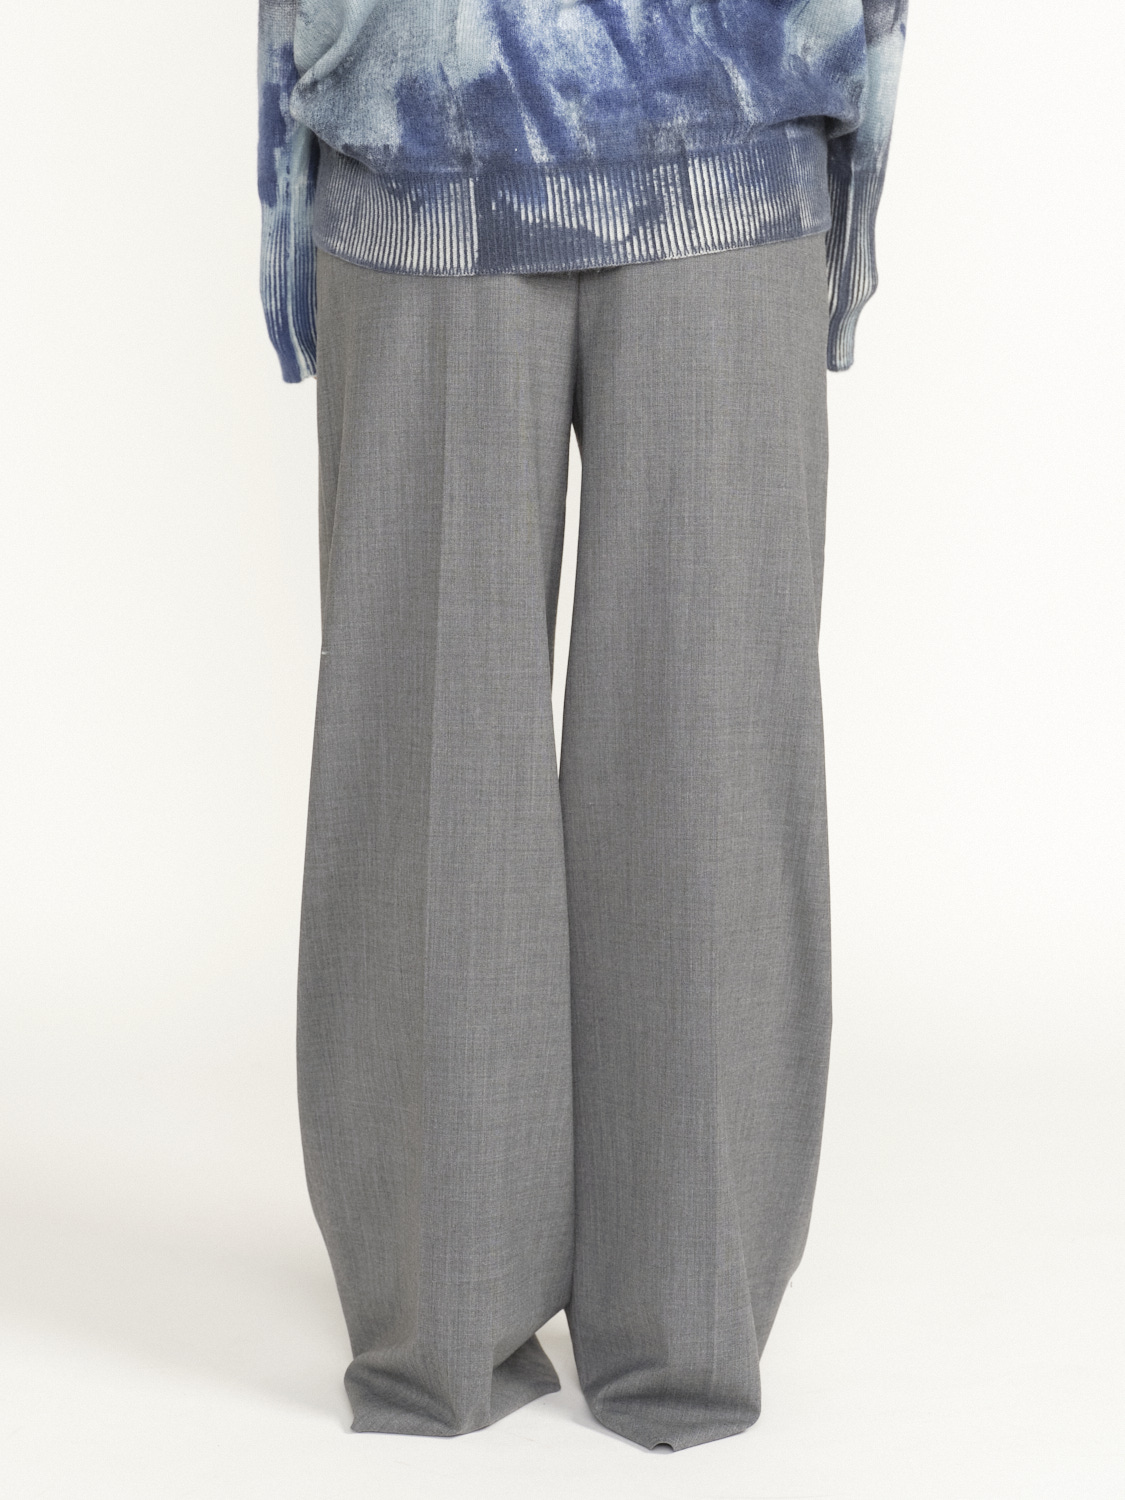 Nili Lotan Johan – Bügelfaltenhose mit gerade geschnittenem Bein  Farbe: grau Größe: 32 grau 32